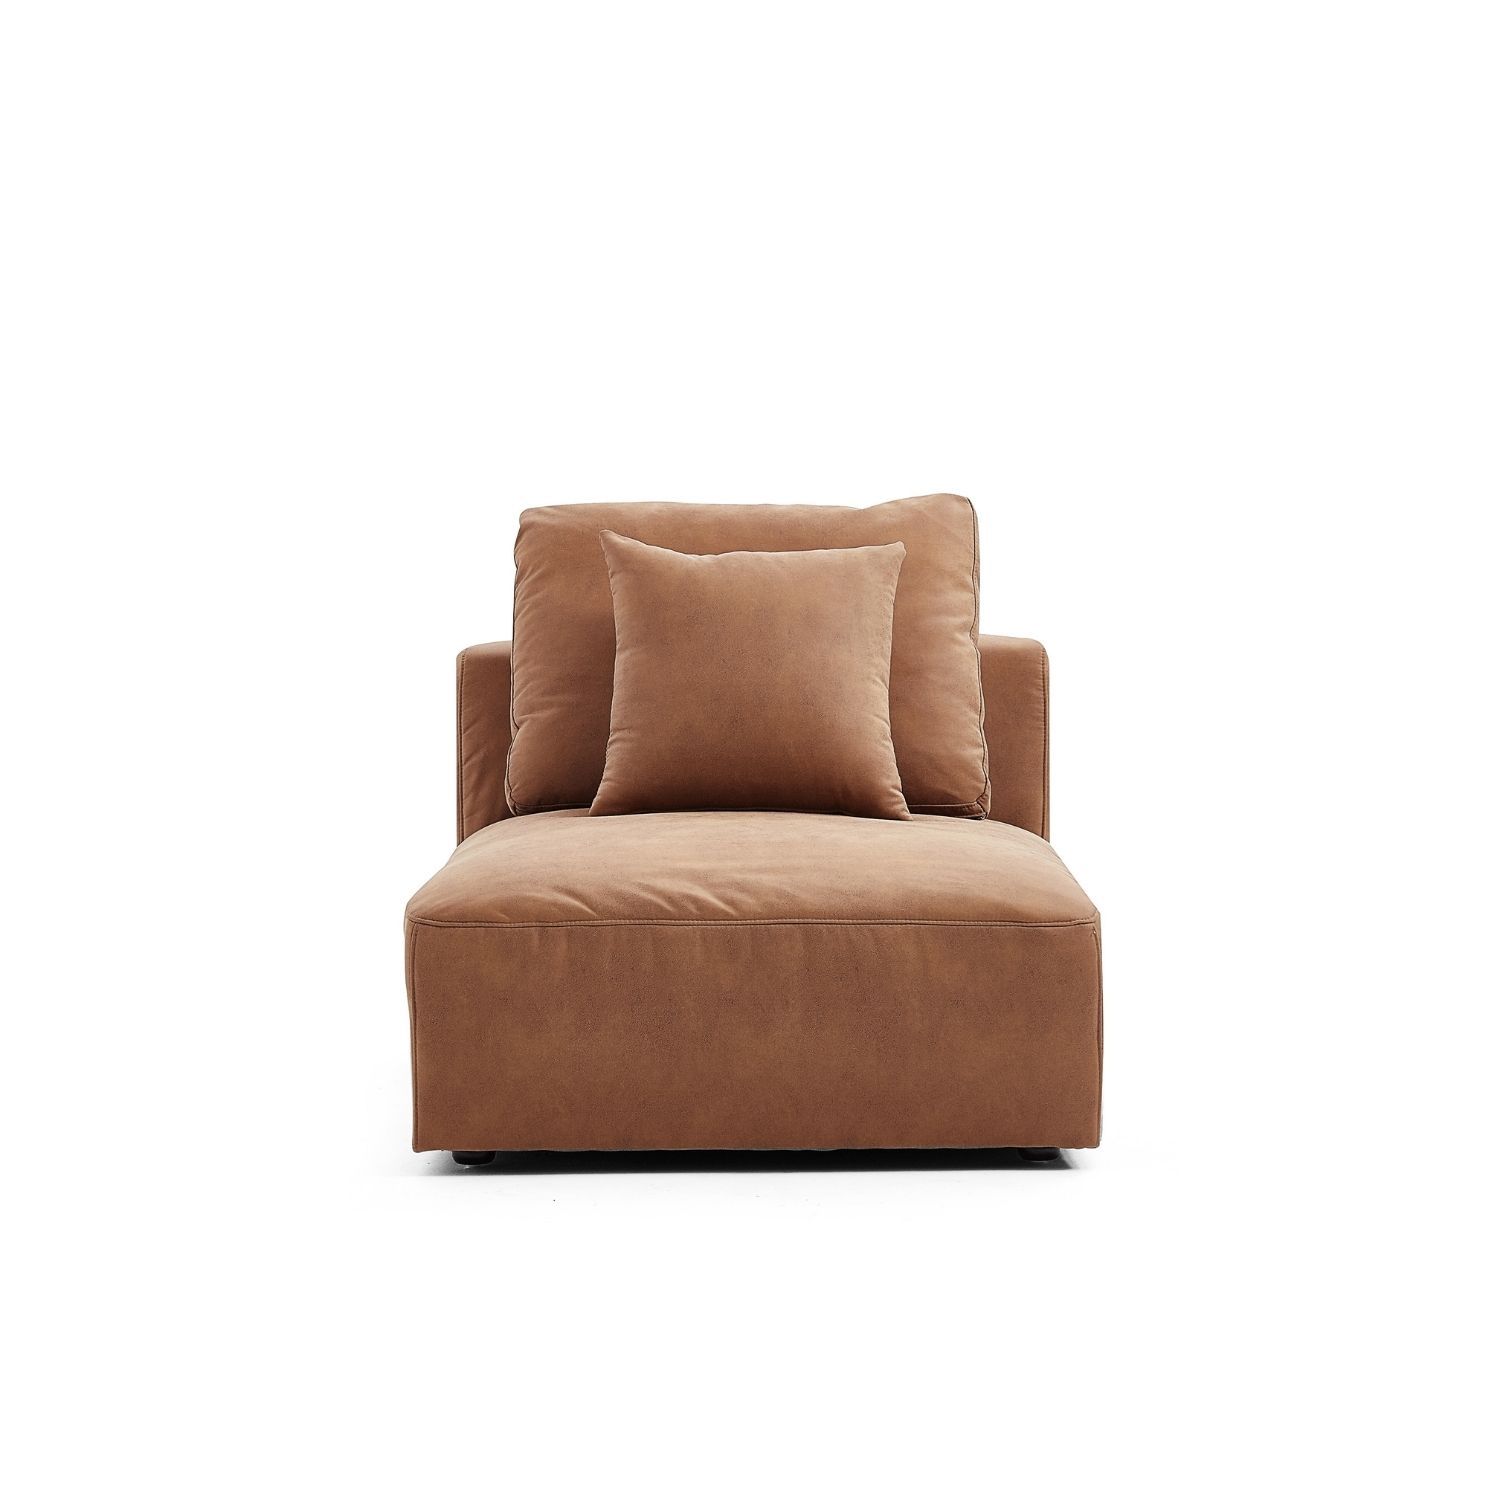 The 5th - Armless Seat Sofa Foundry Camel 